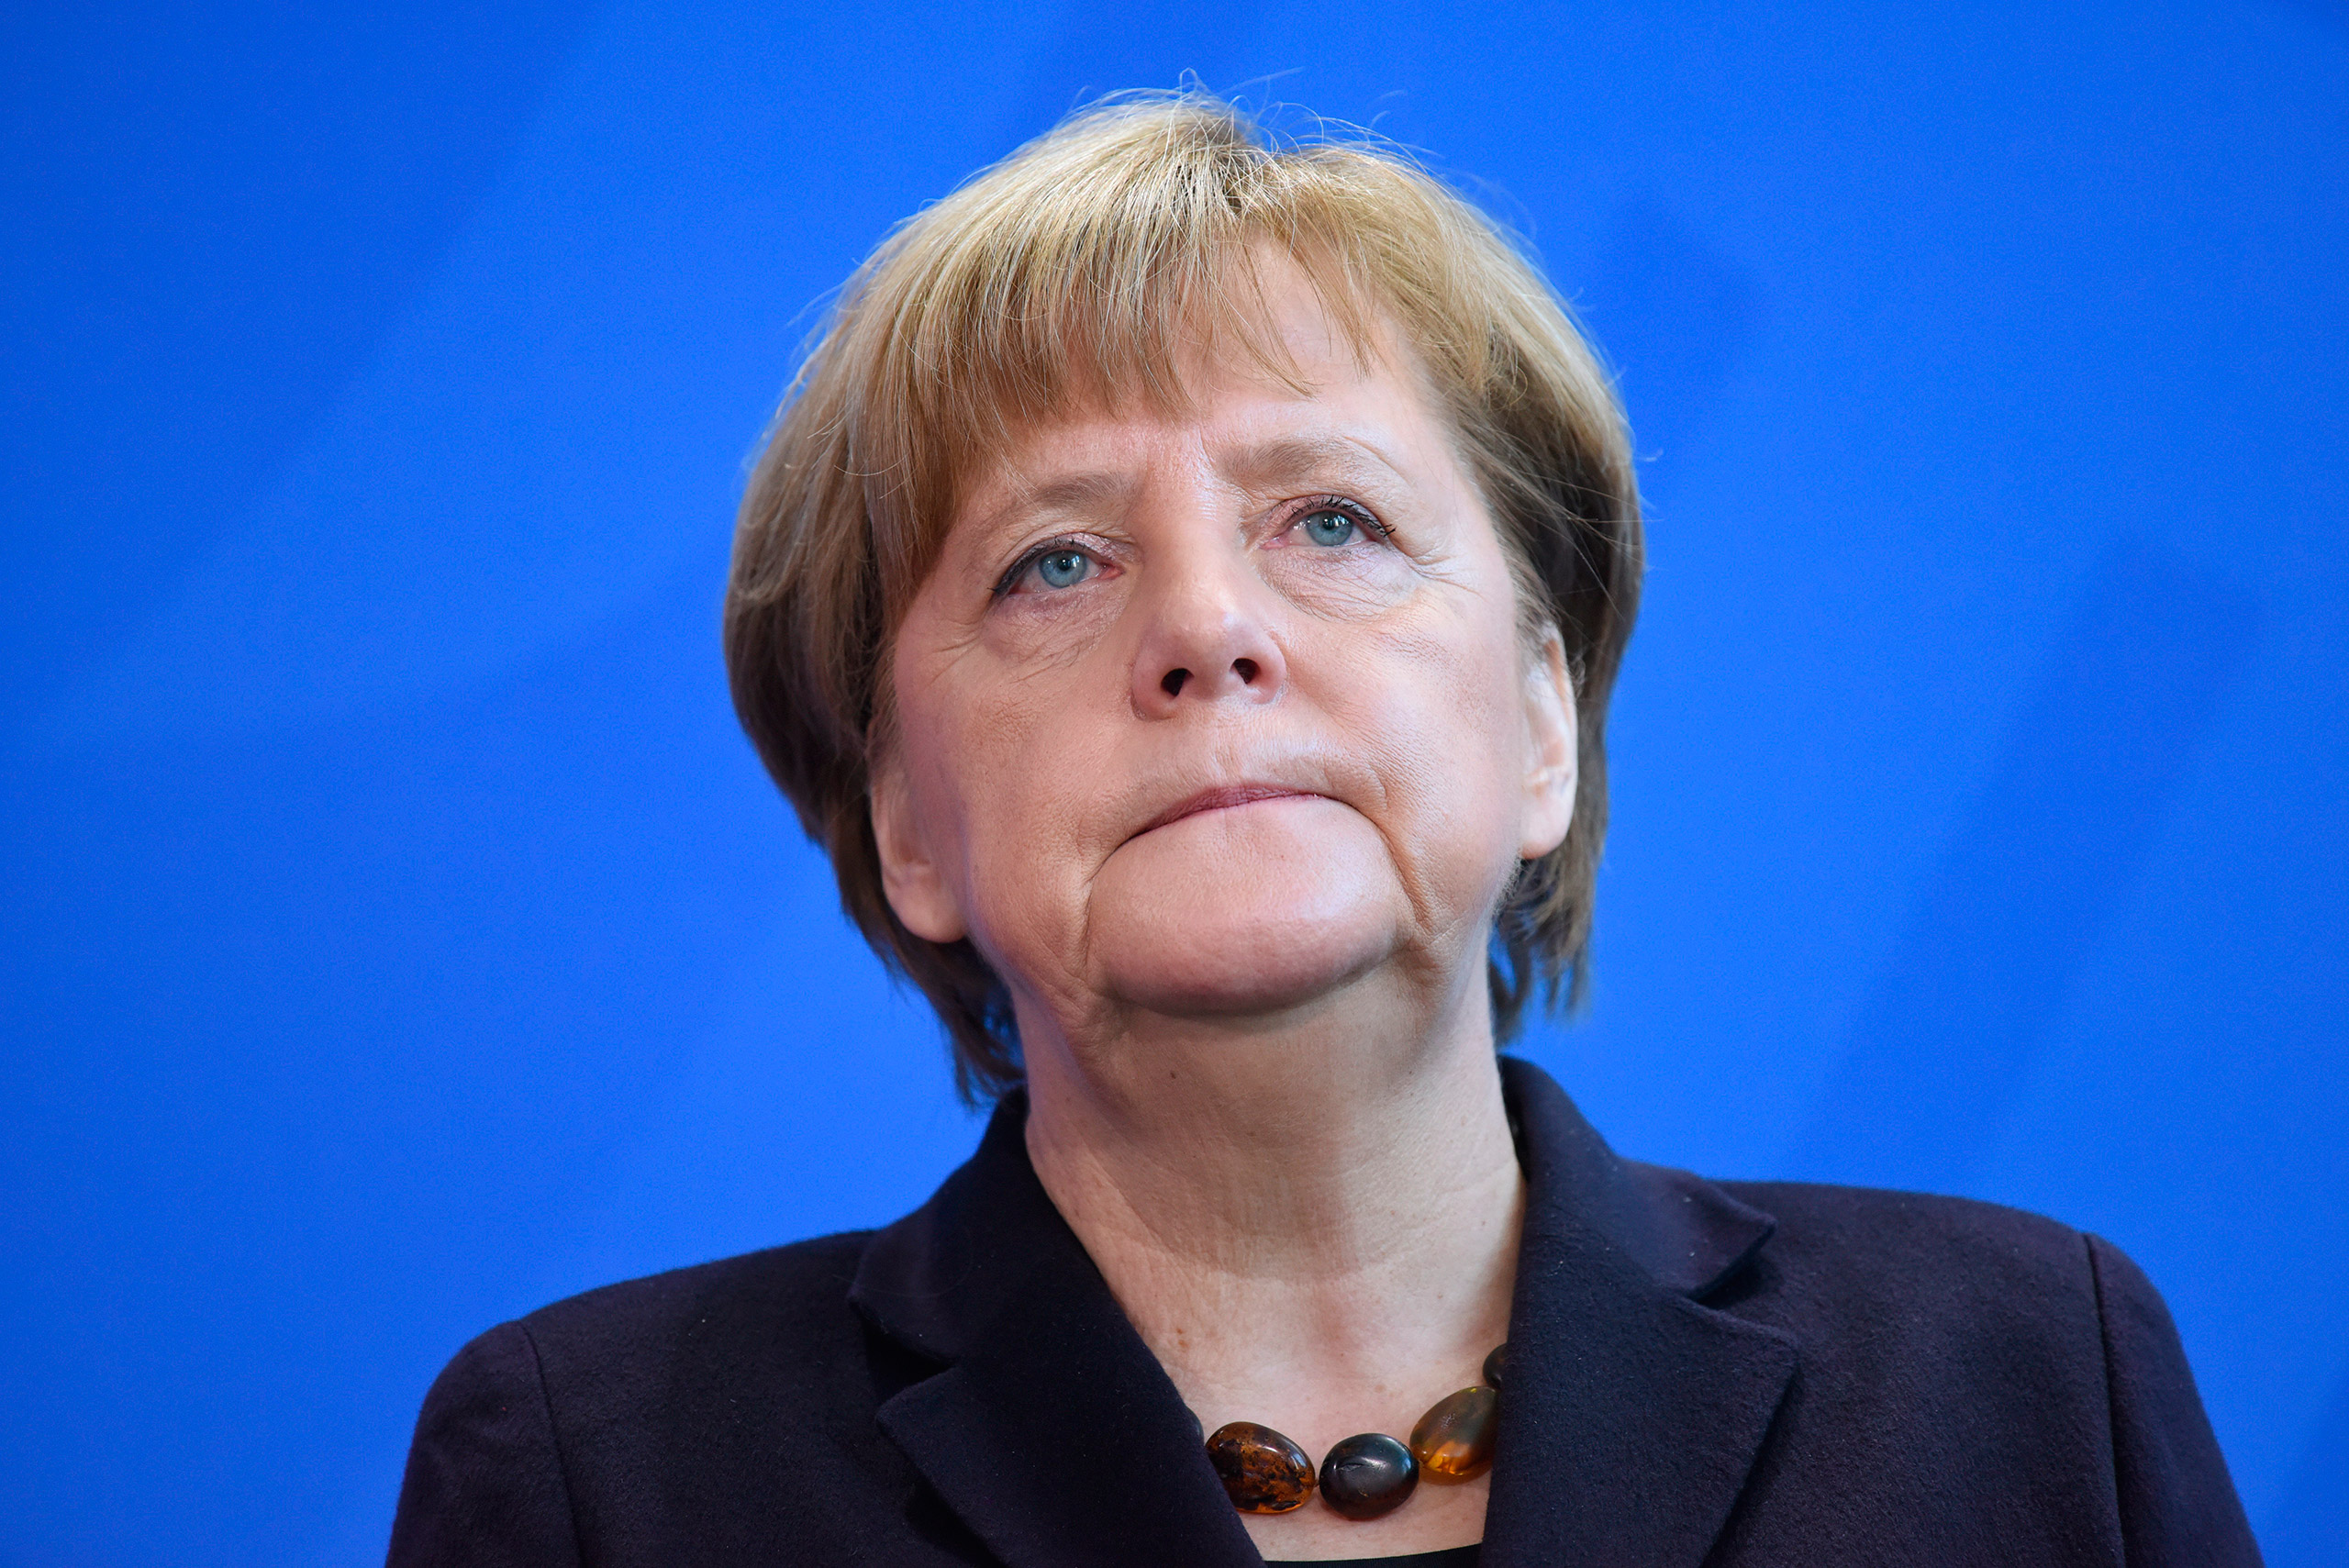 DW: Διακυβεύεται το μέλλον της γερμανικής κυβέρνησης